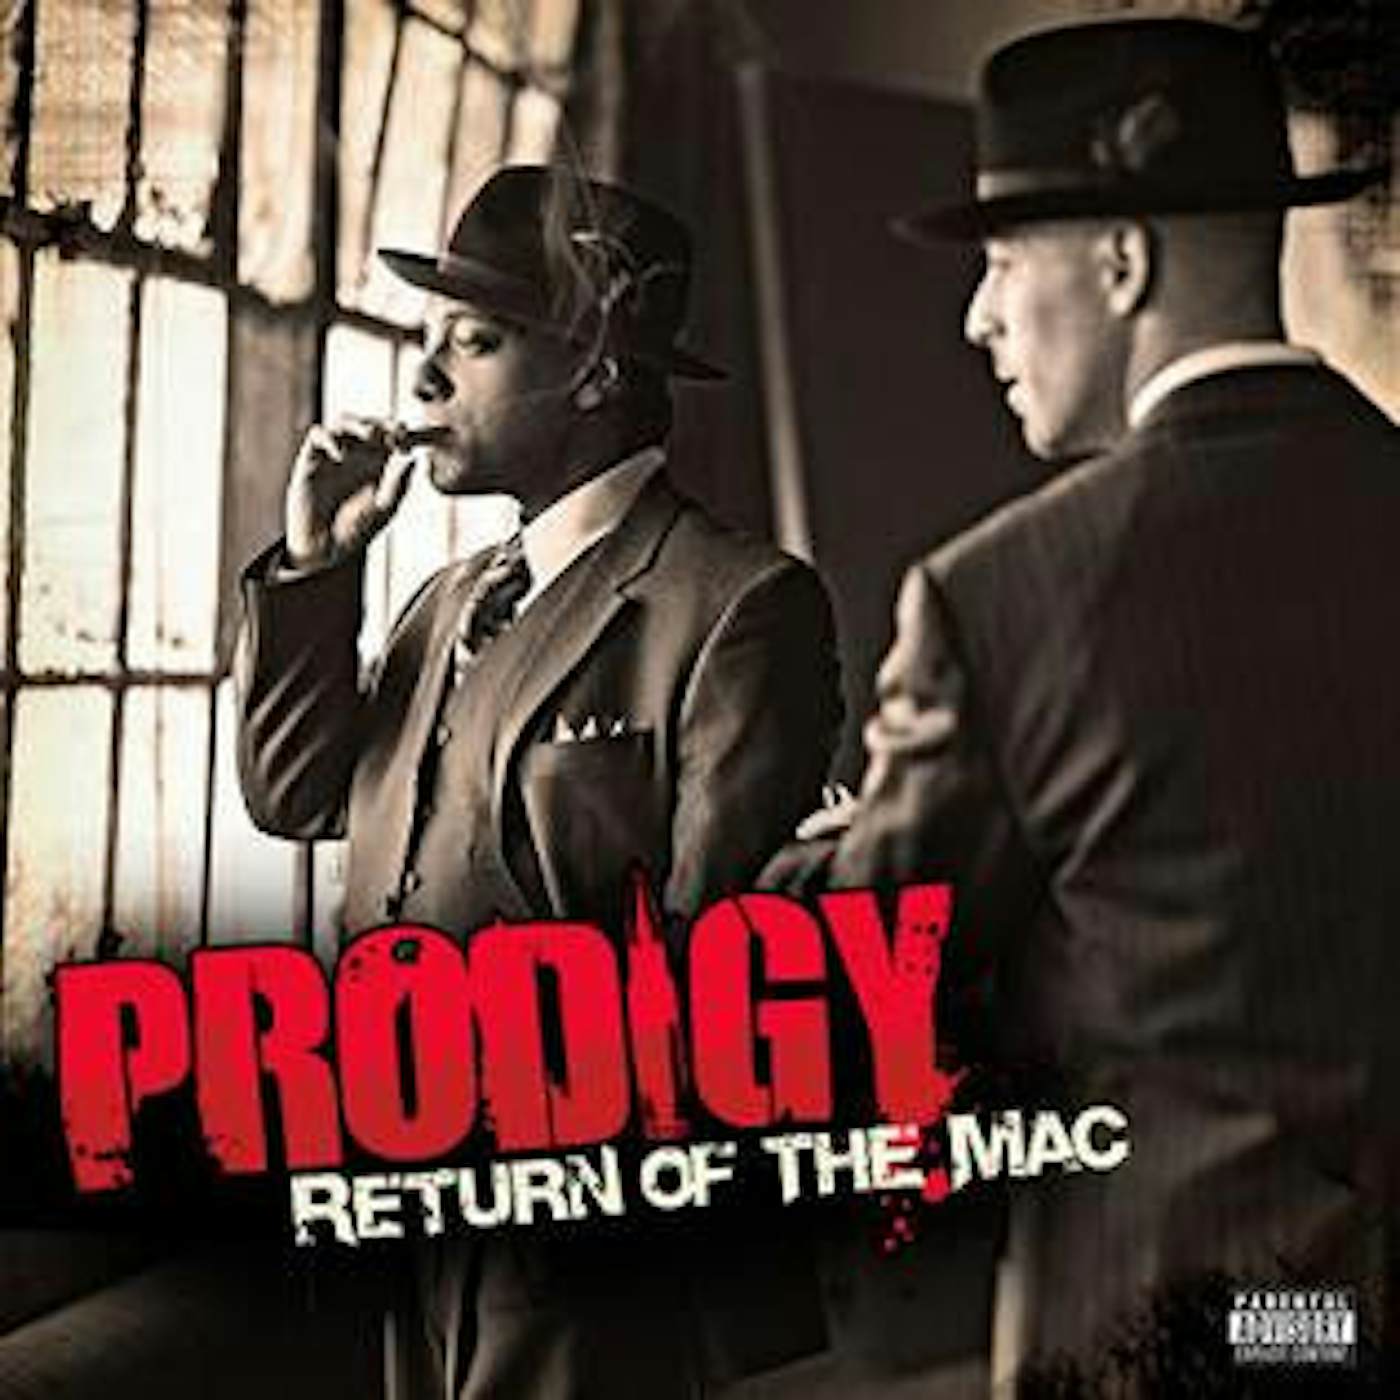 The Prodigy (Of Mobb Deep) - Return of the Mack RSD